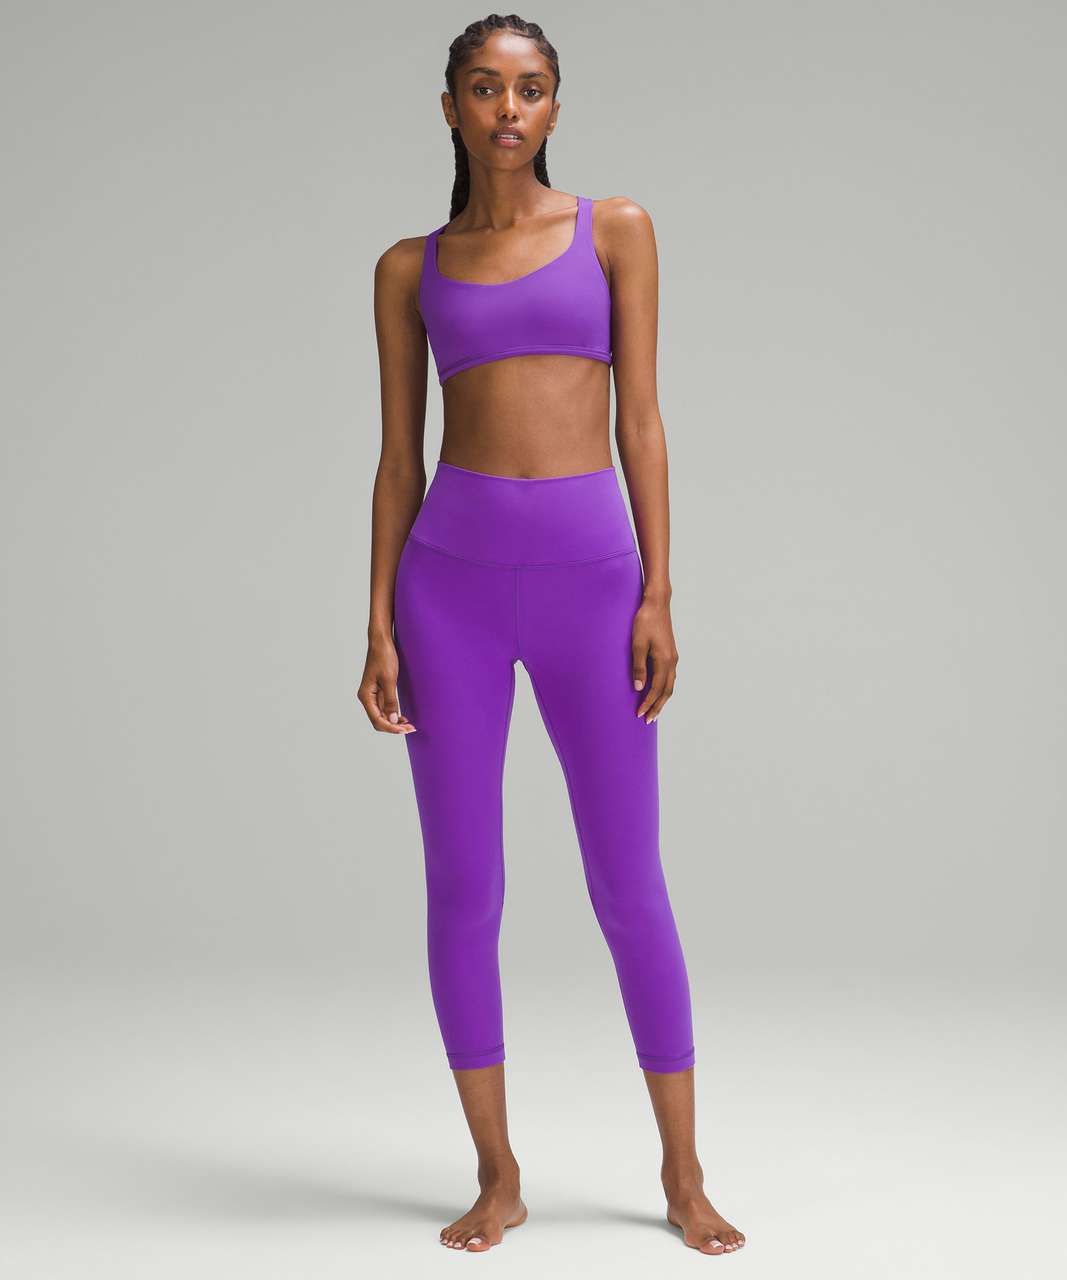 Leggings Lululemon Purple size 4 US in Spandex - 27249135